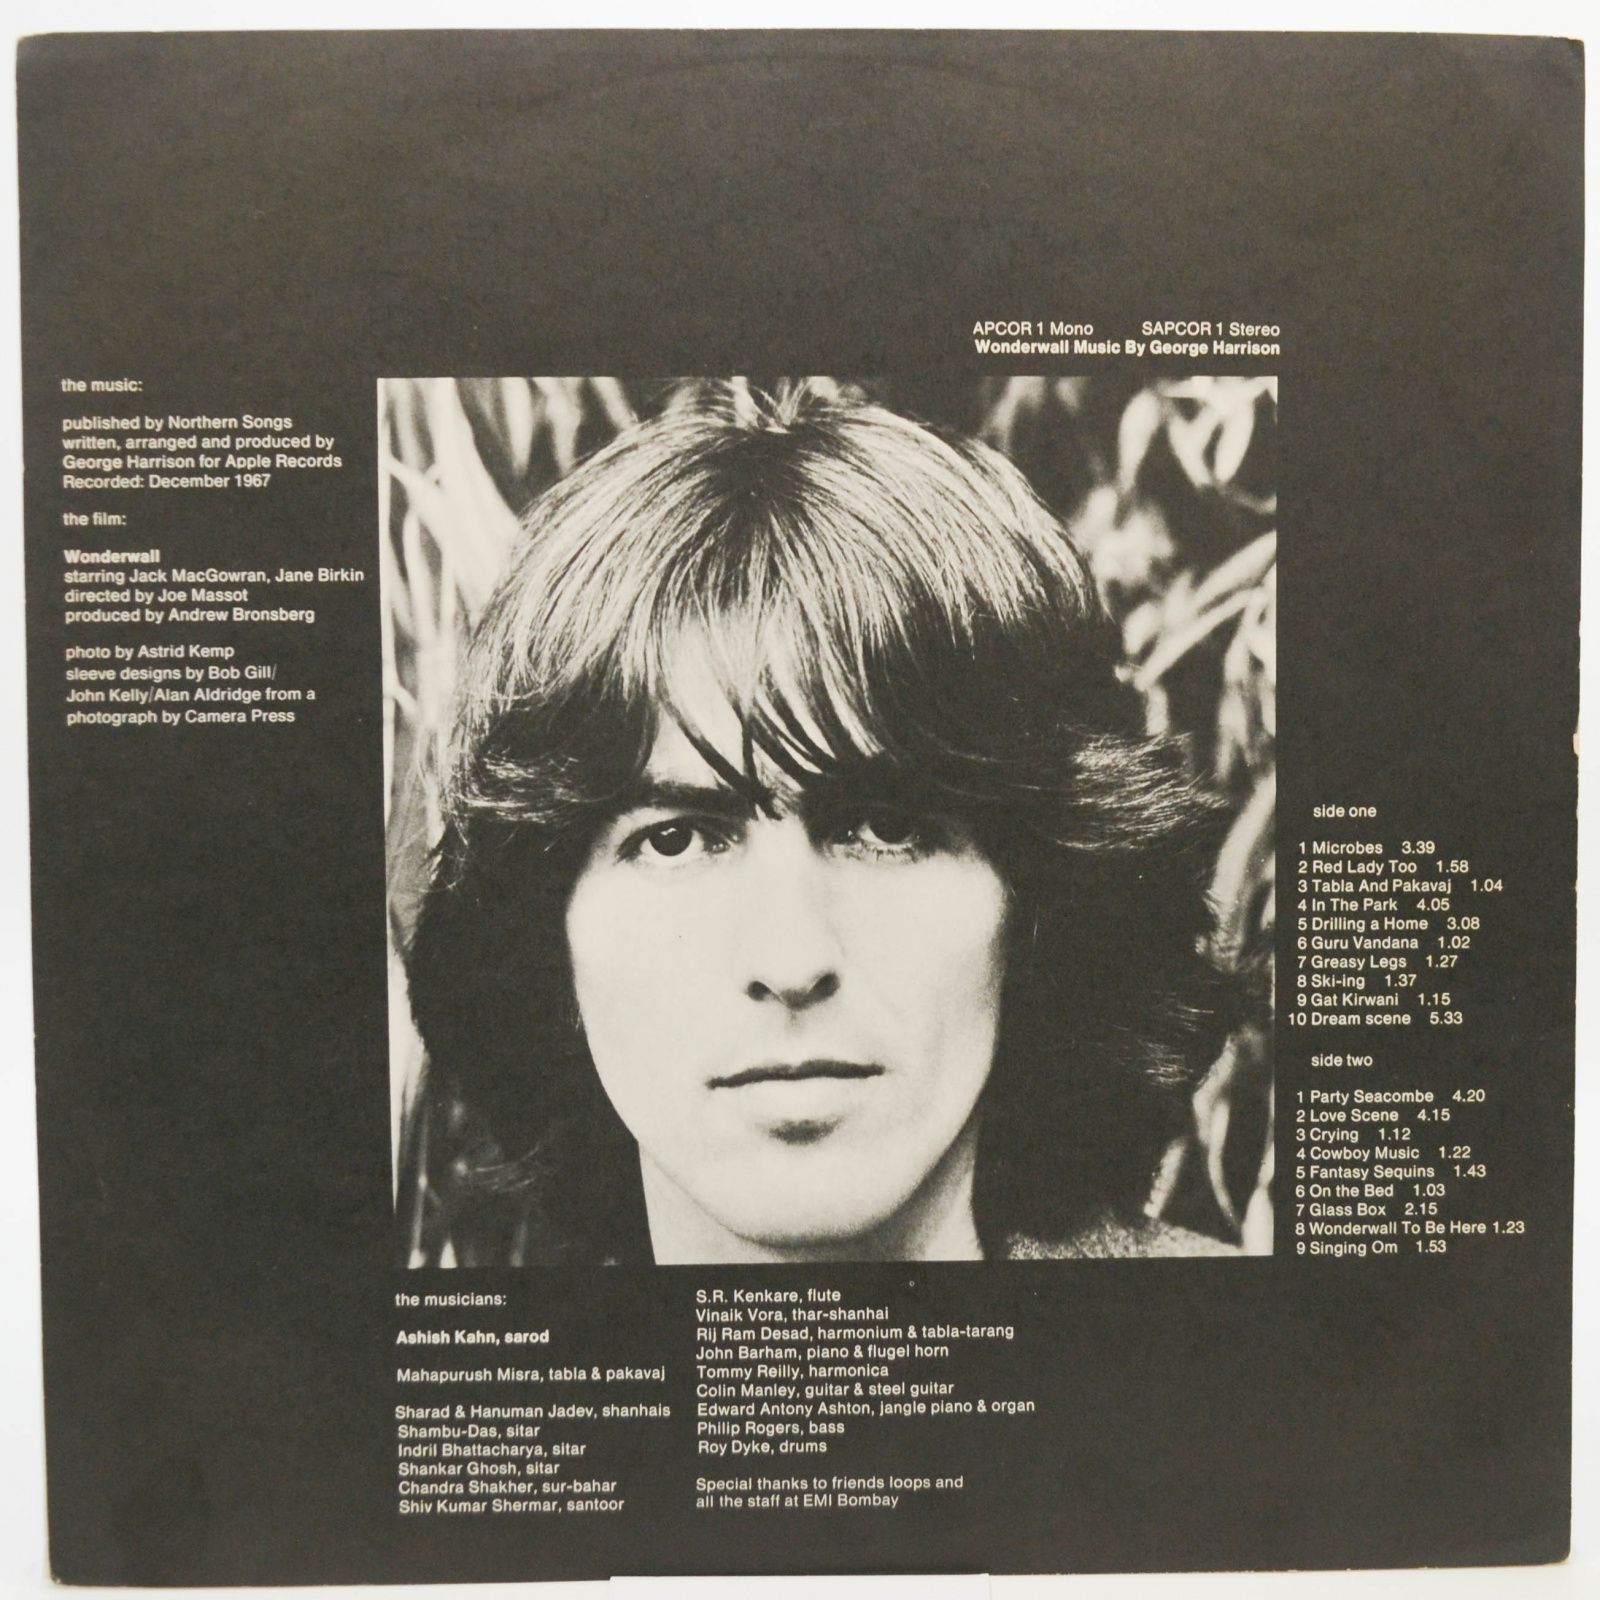 George Harrison — Wonderwall Music, 1968